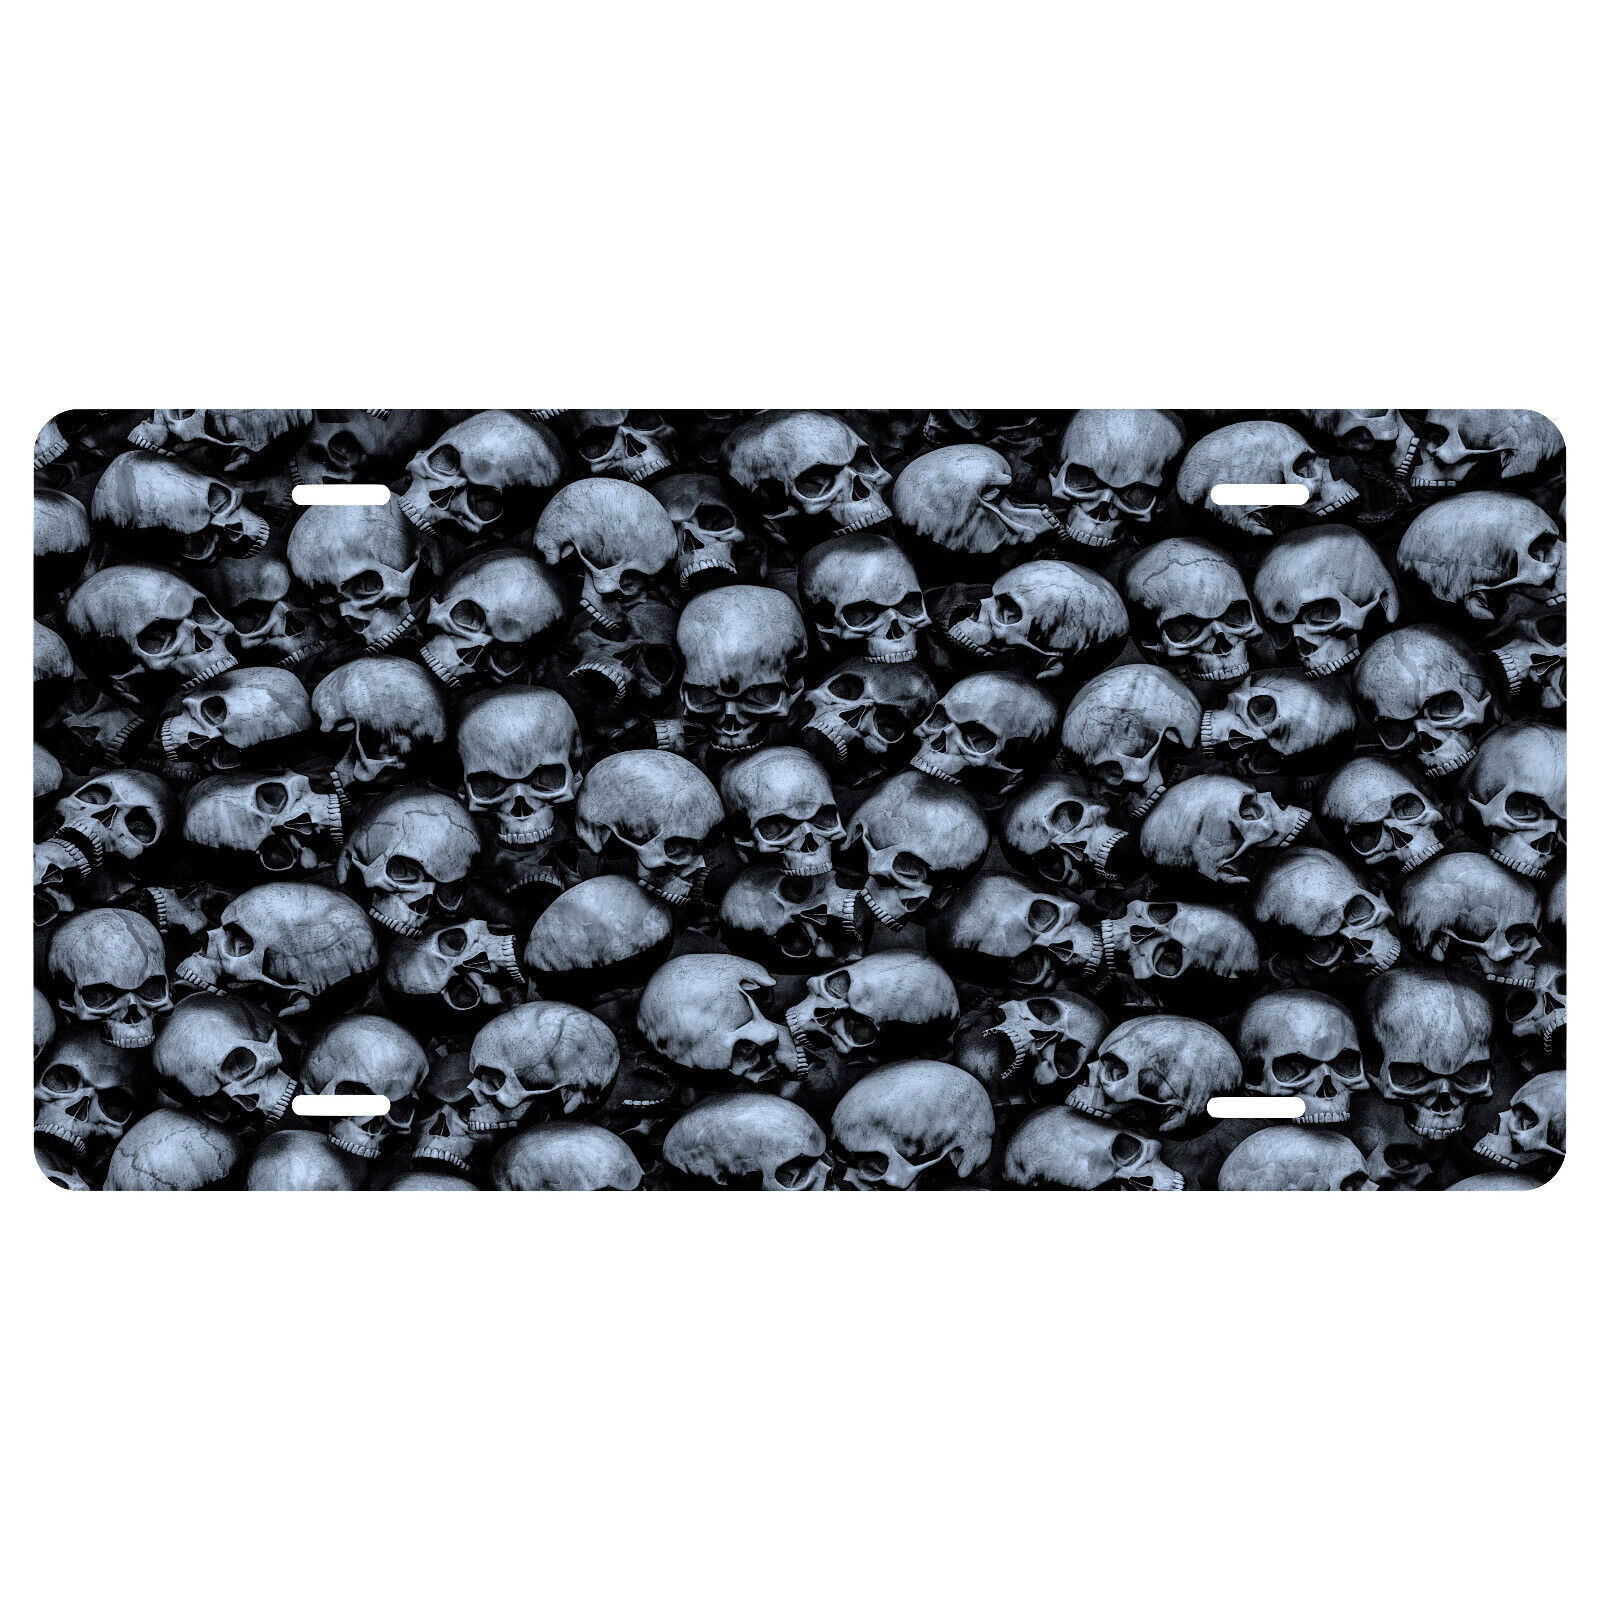 Skull Novelty Front License Plate - Man Cave - She Shed - Pile of Skulls - Goth